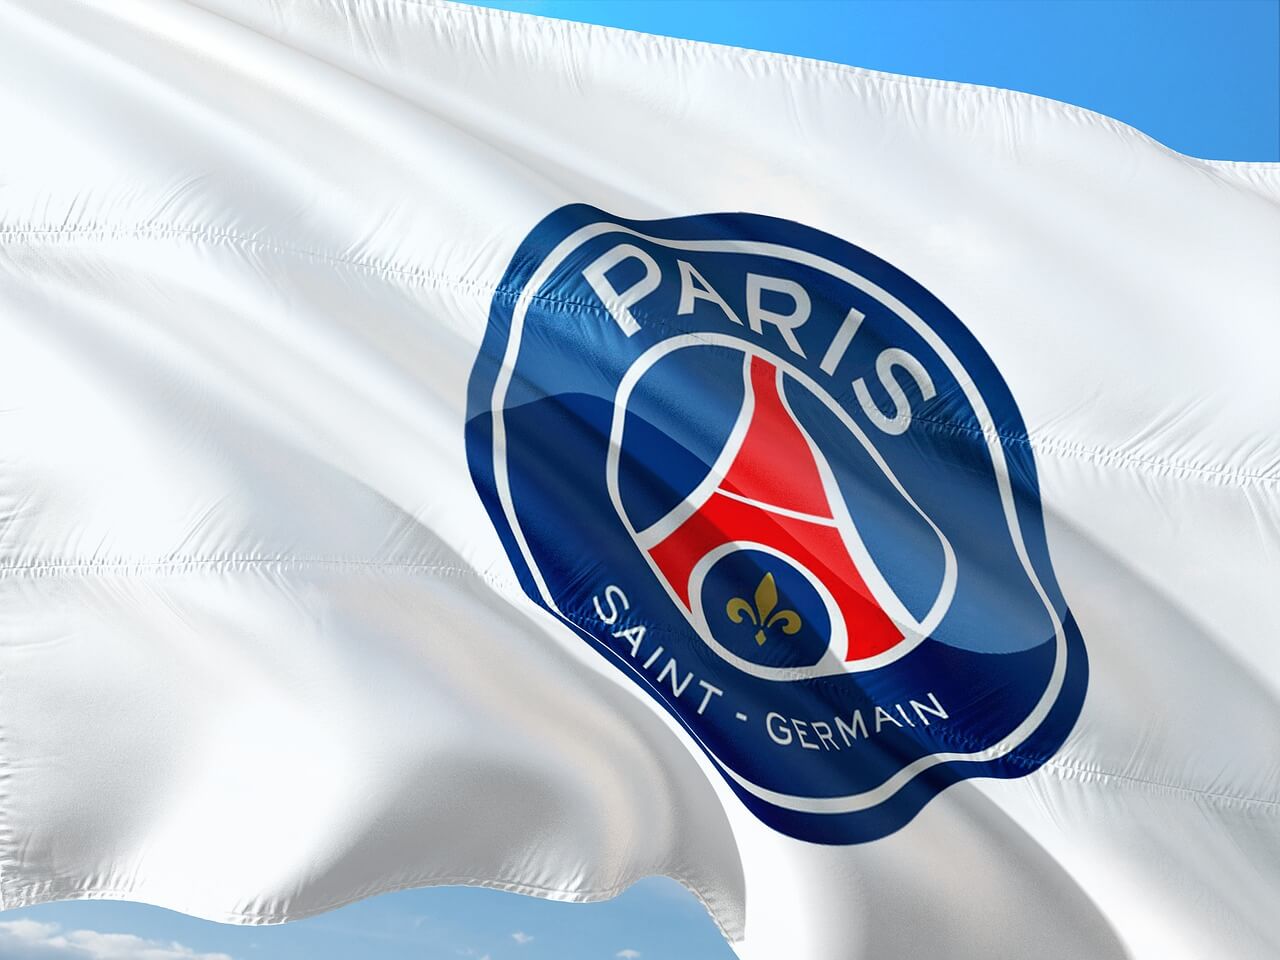 De vlag van de opkomende voetbalclub PSG